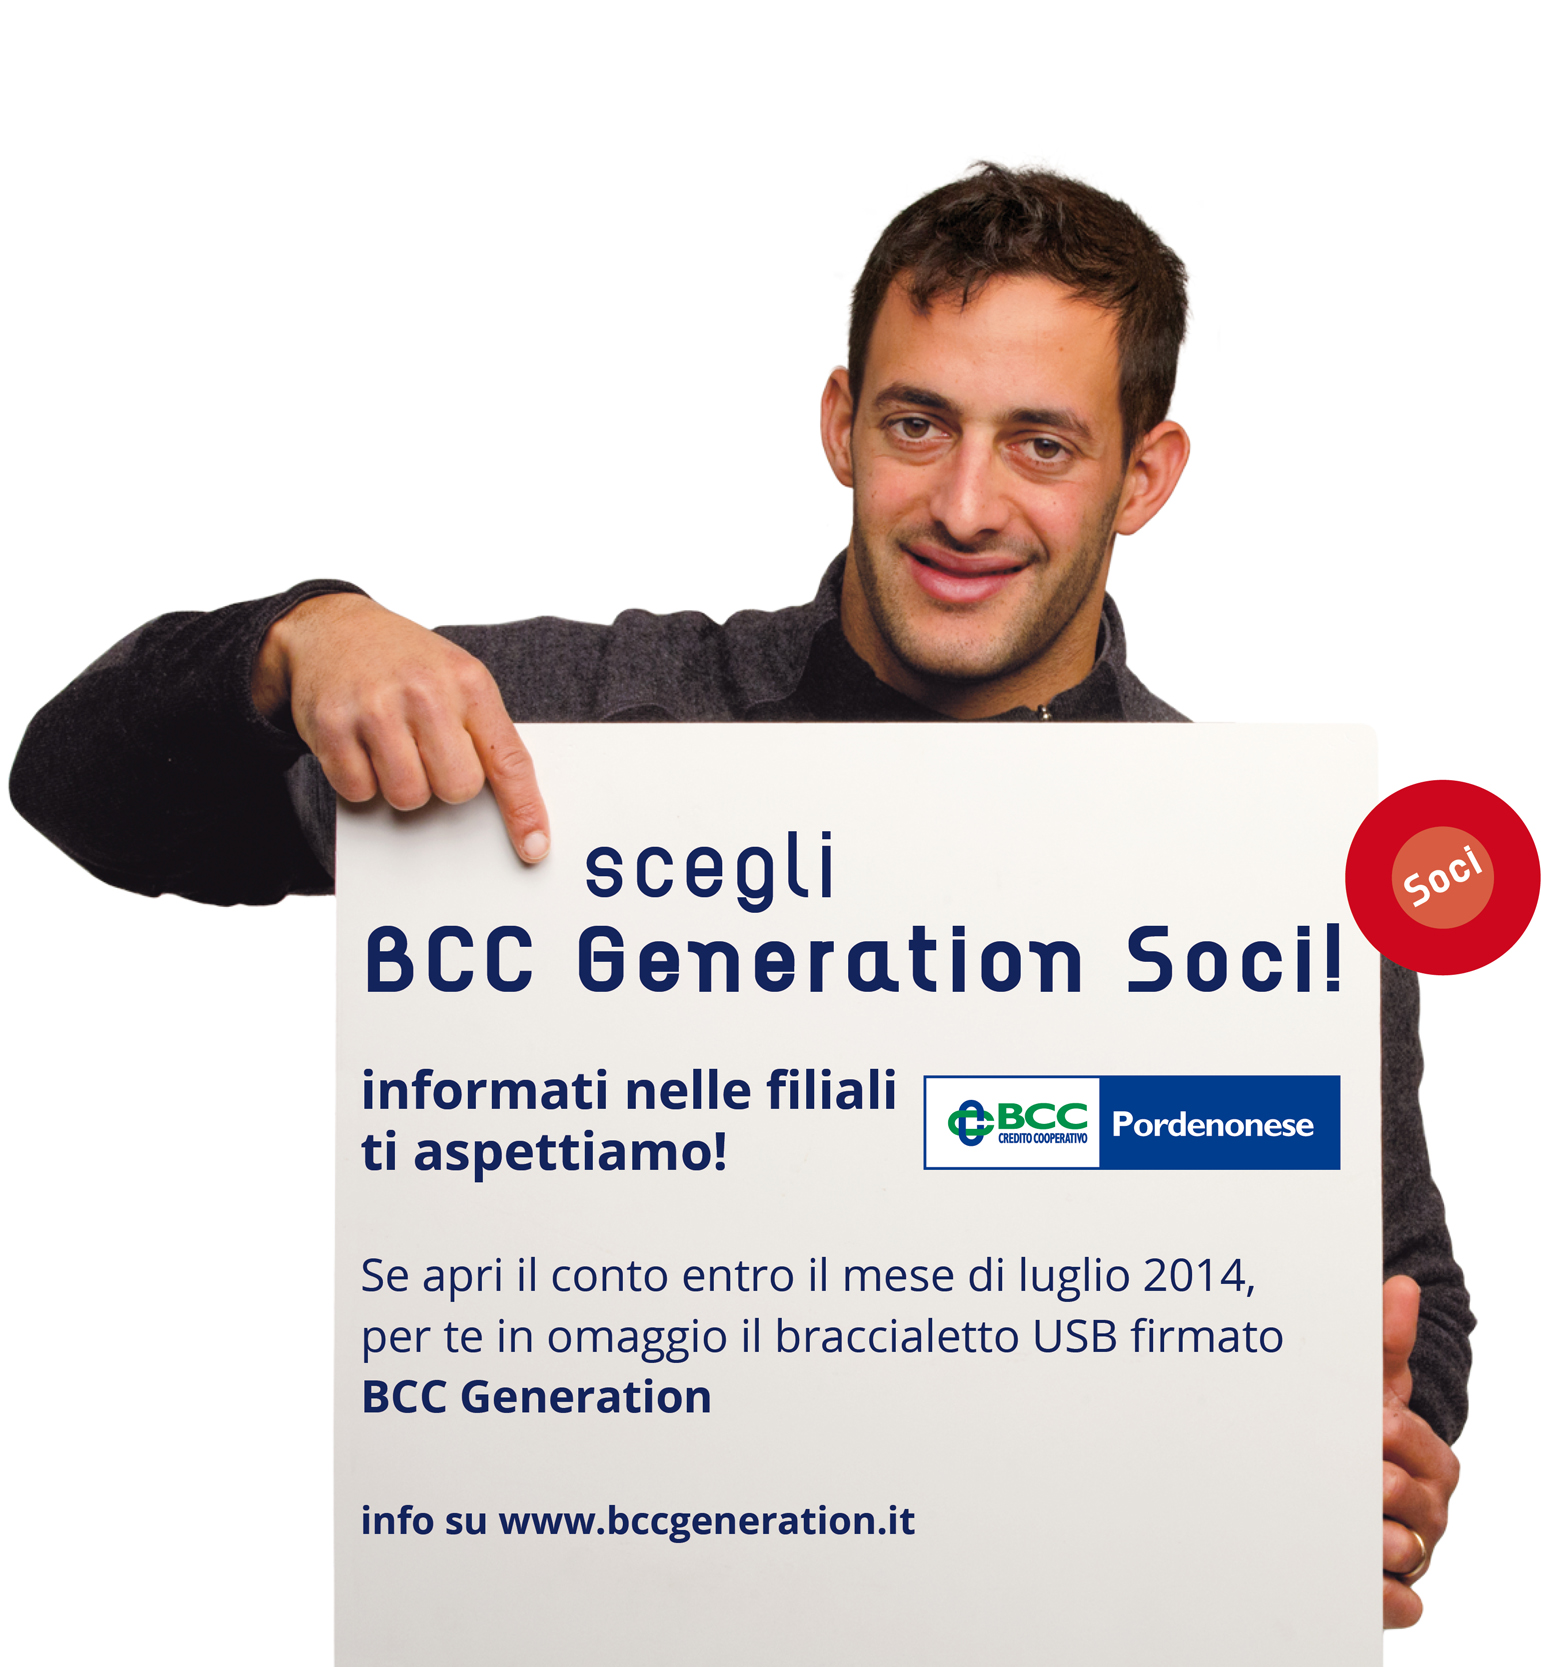 BCC Generation Soci